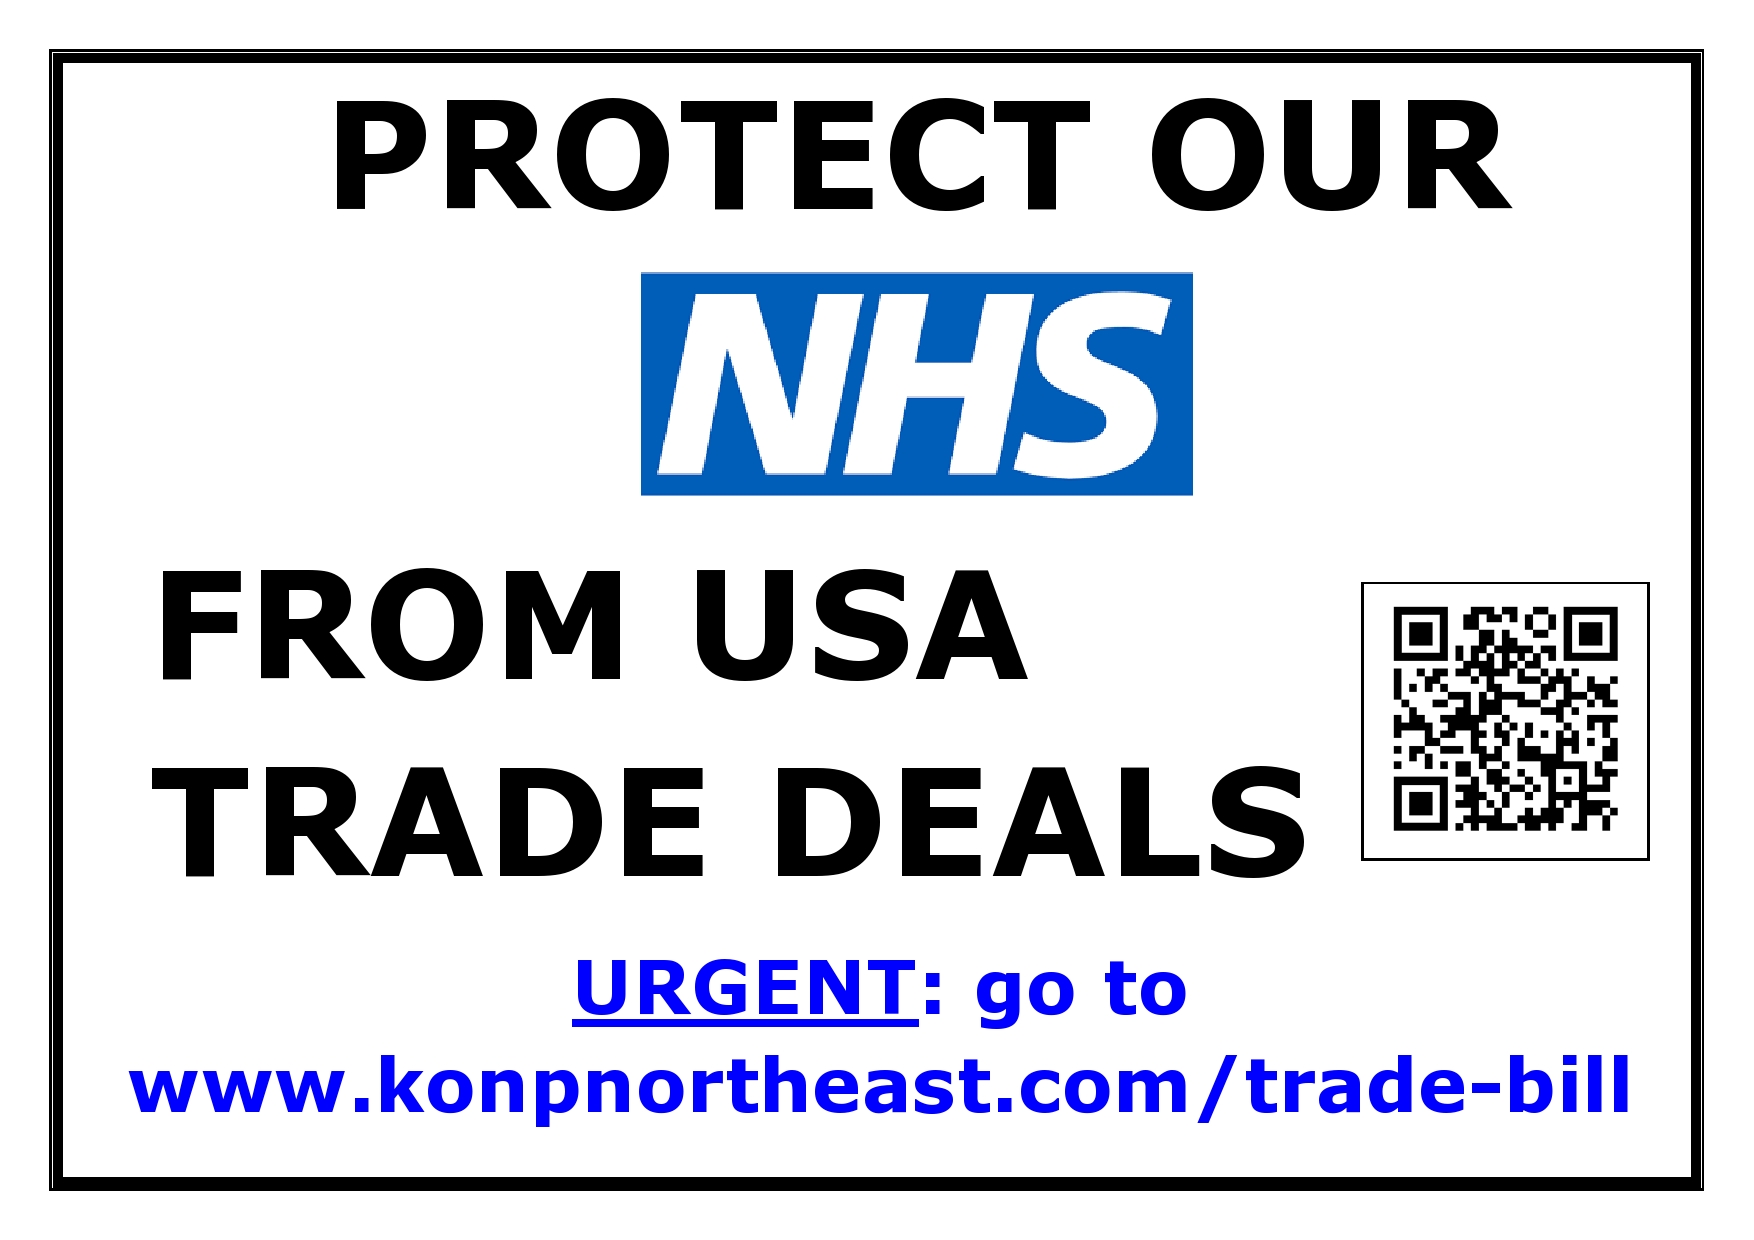 KONPNE trade deals poster